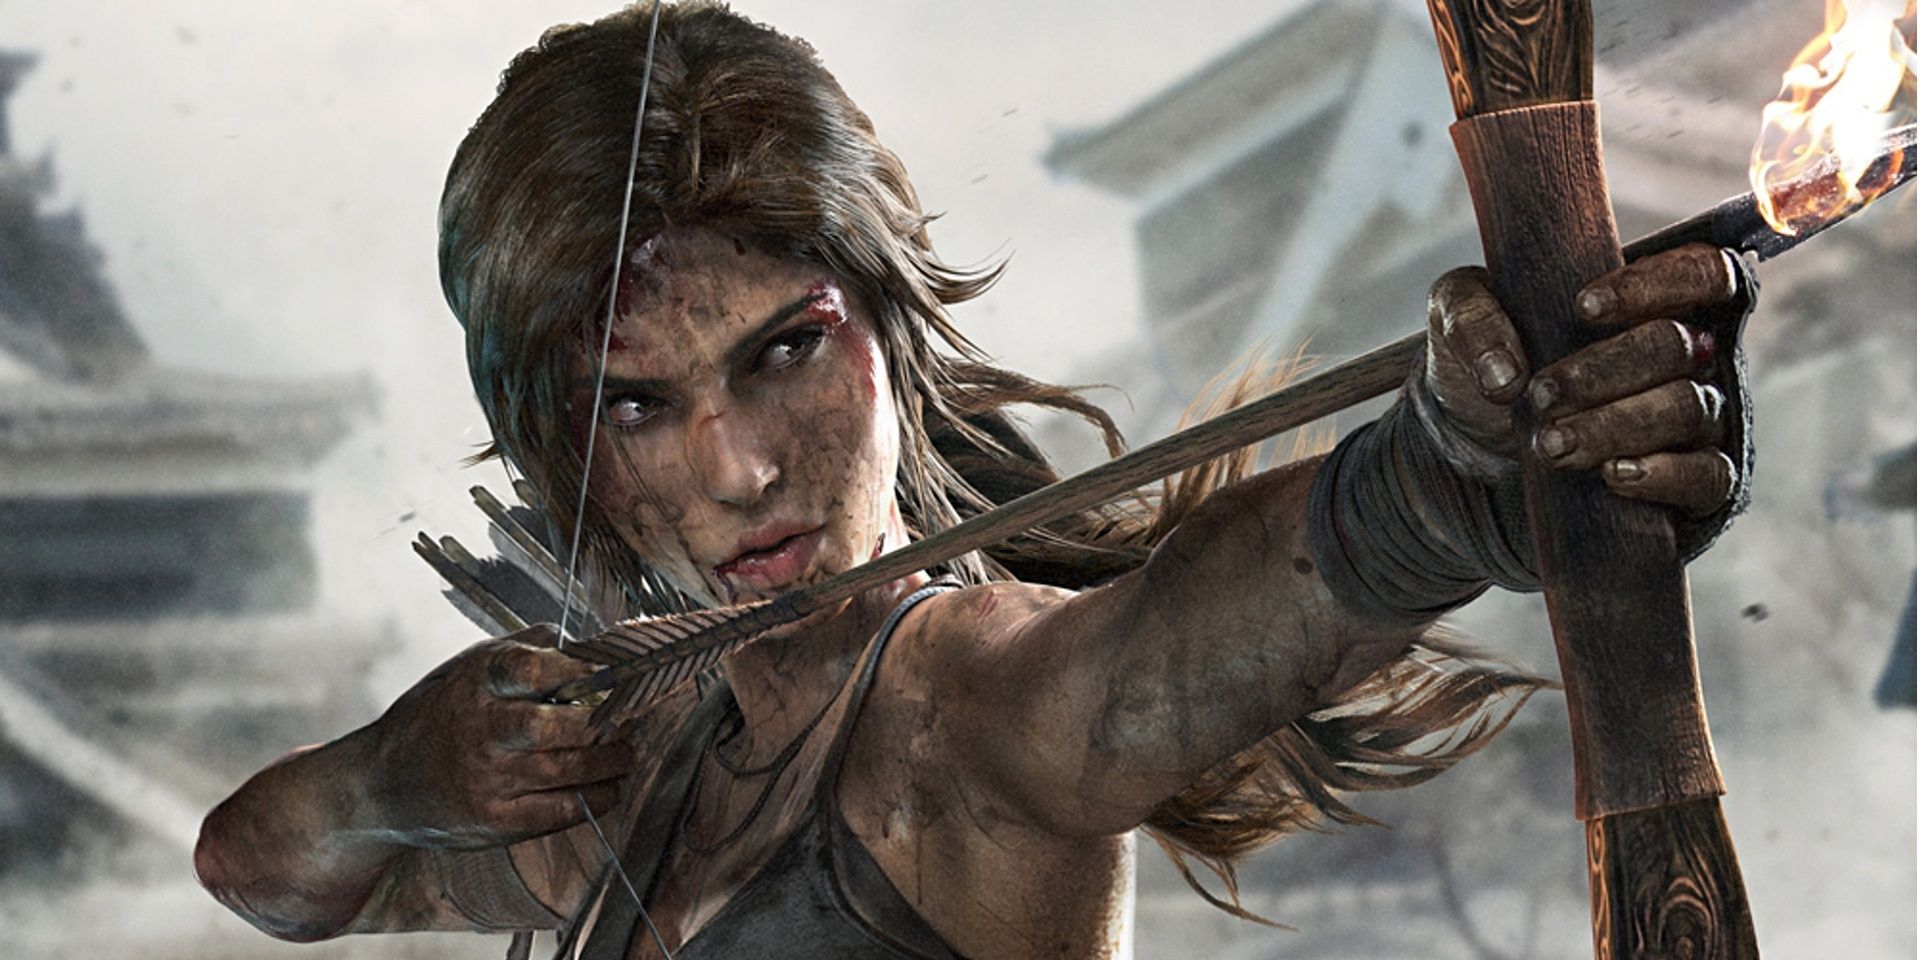 Lara Croft Doing Archery